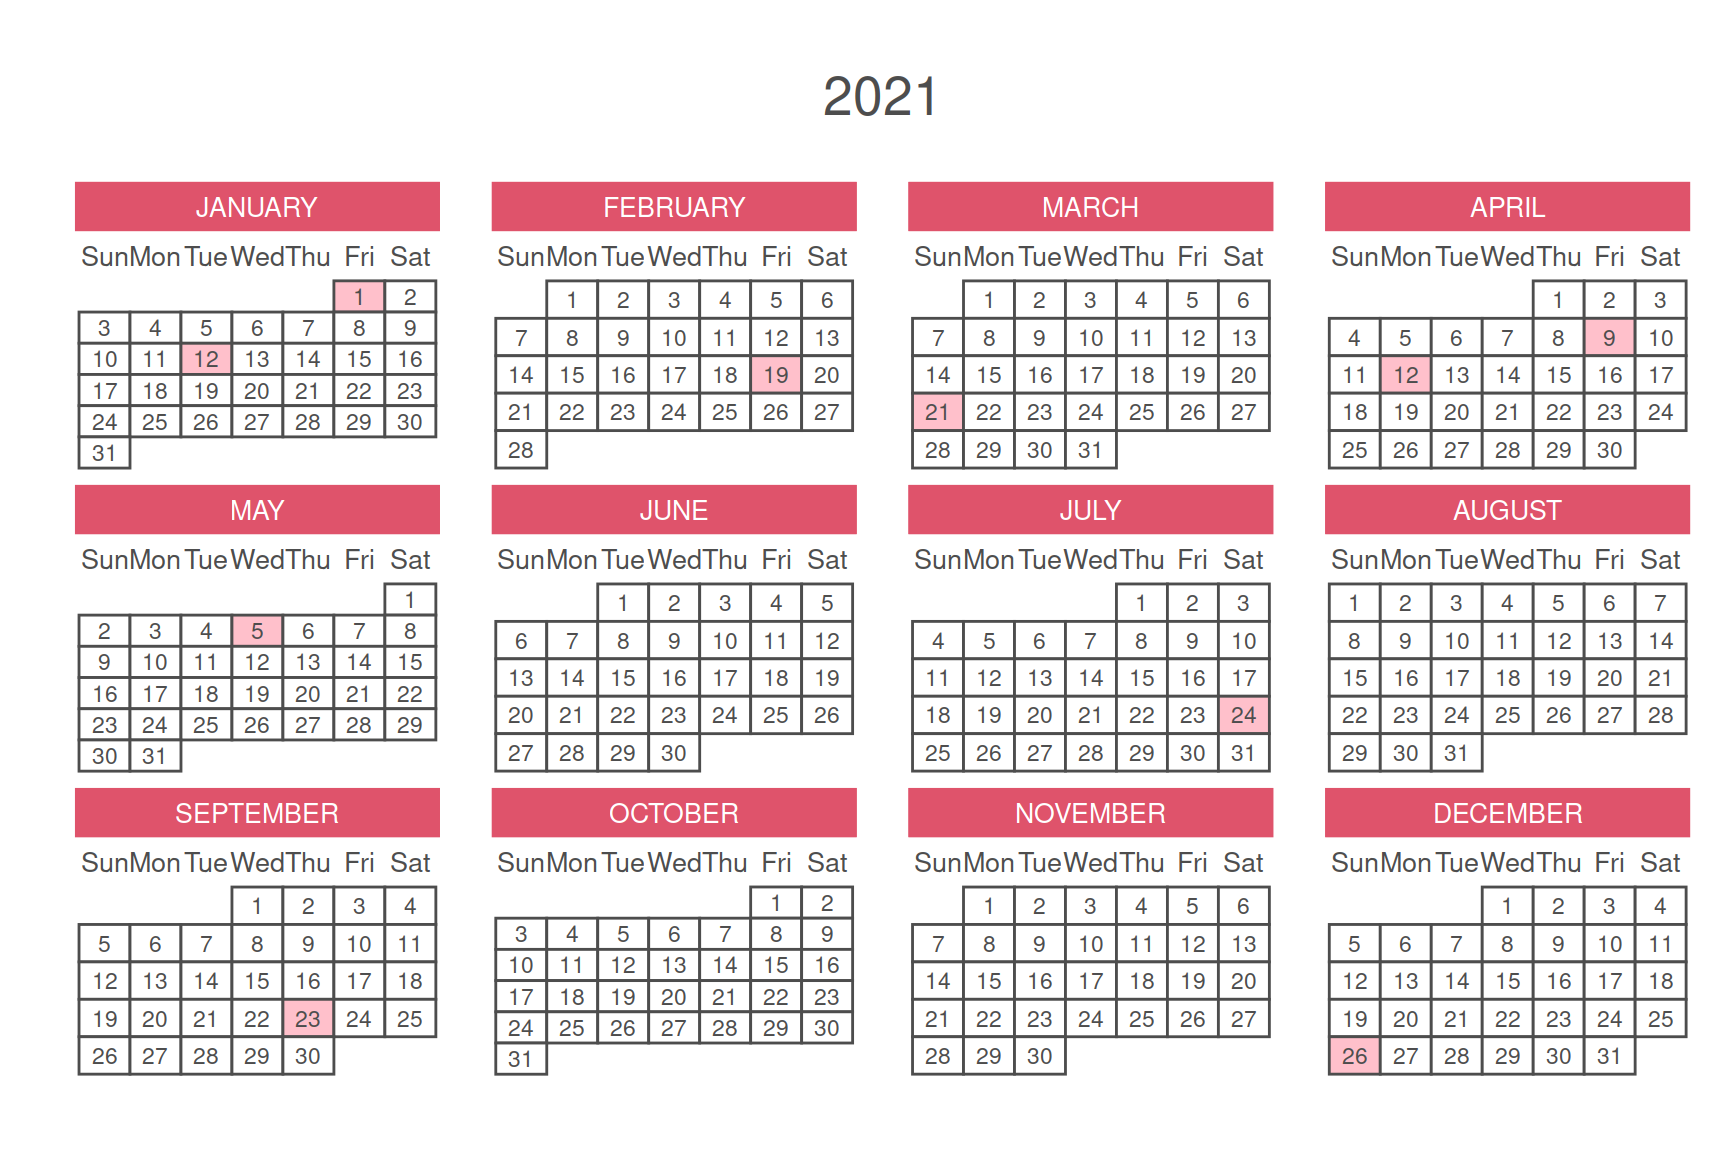 Calendar customization in R